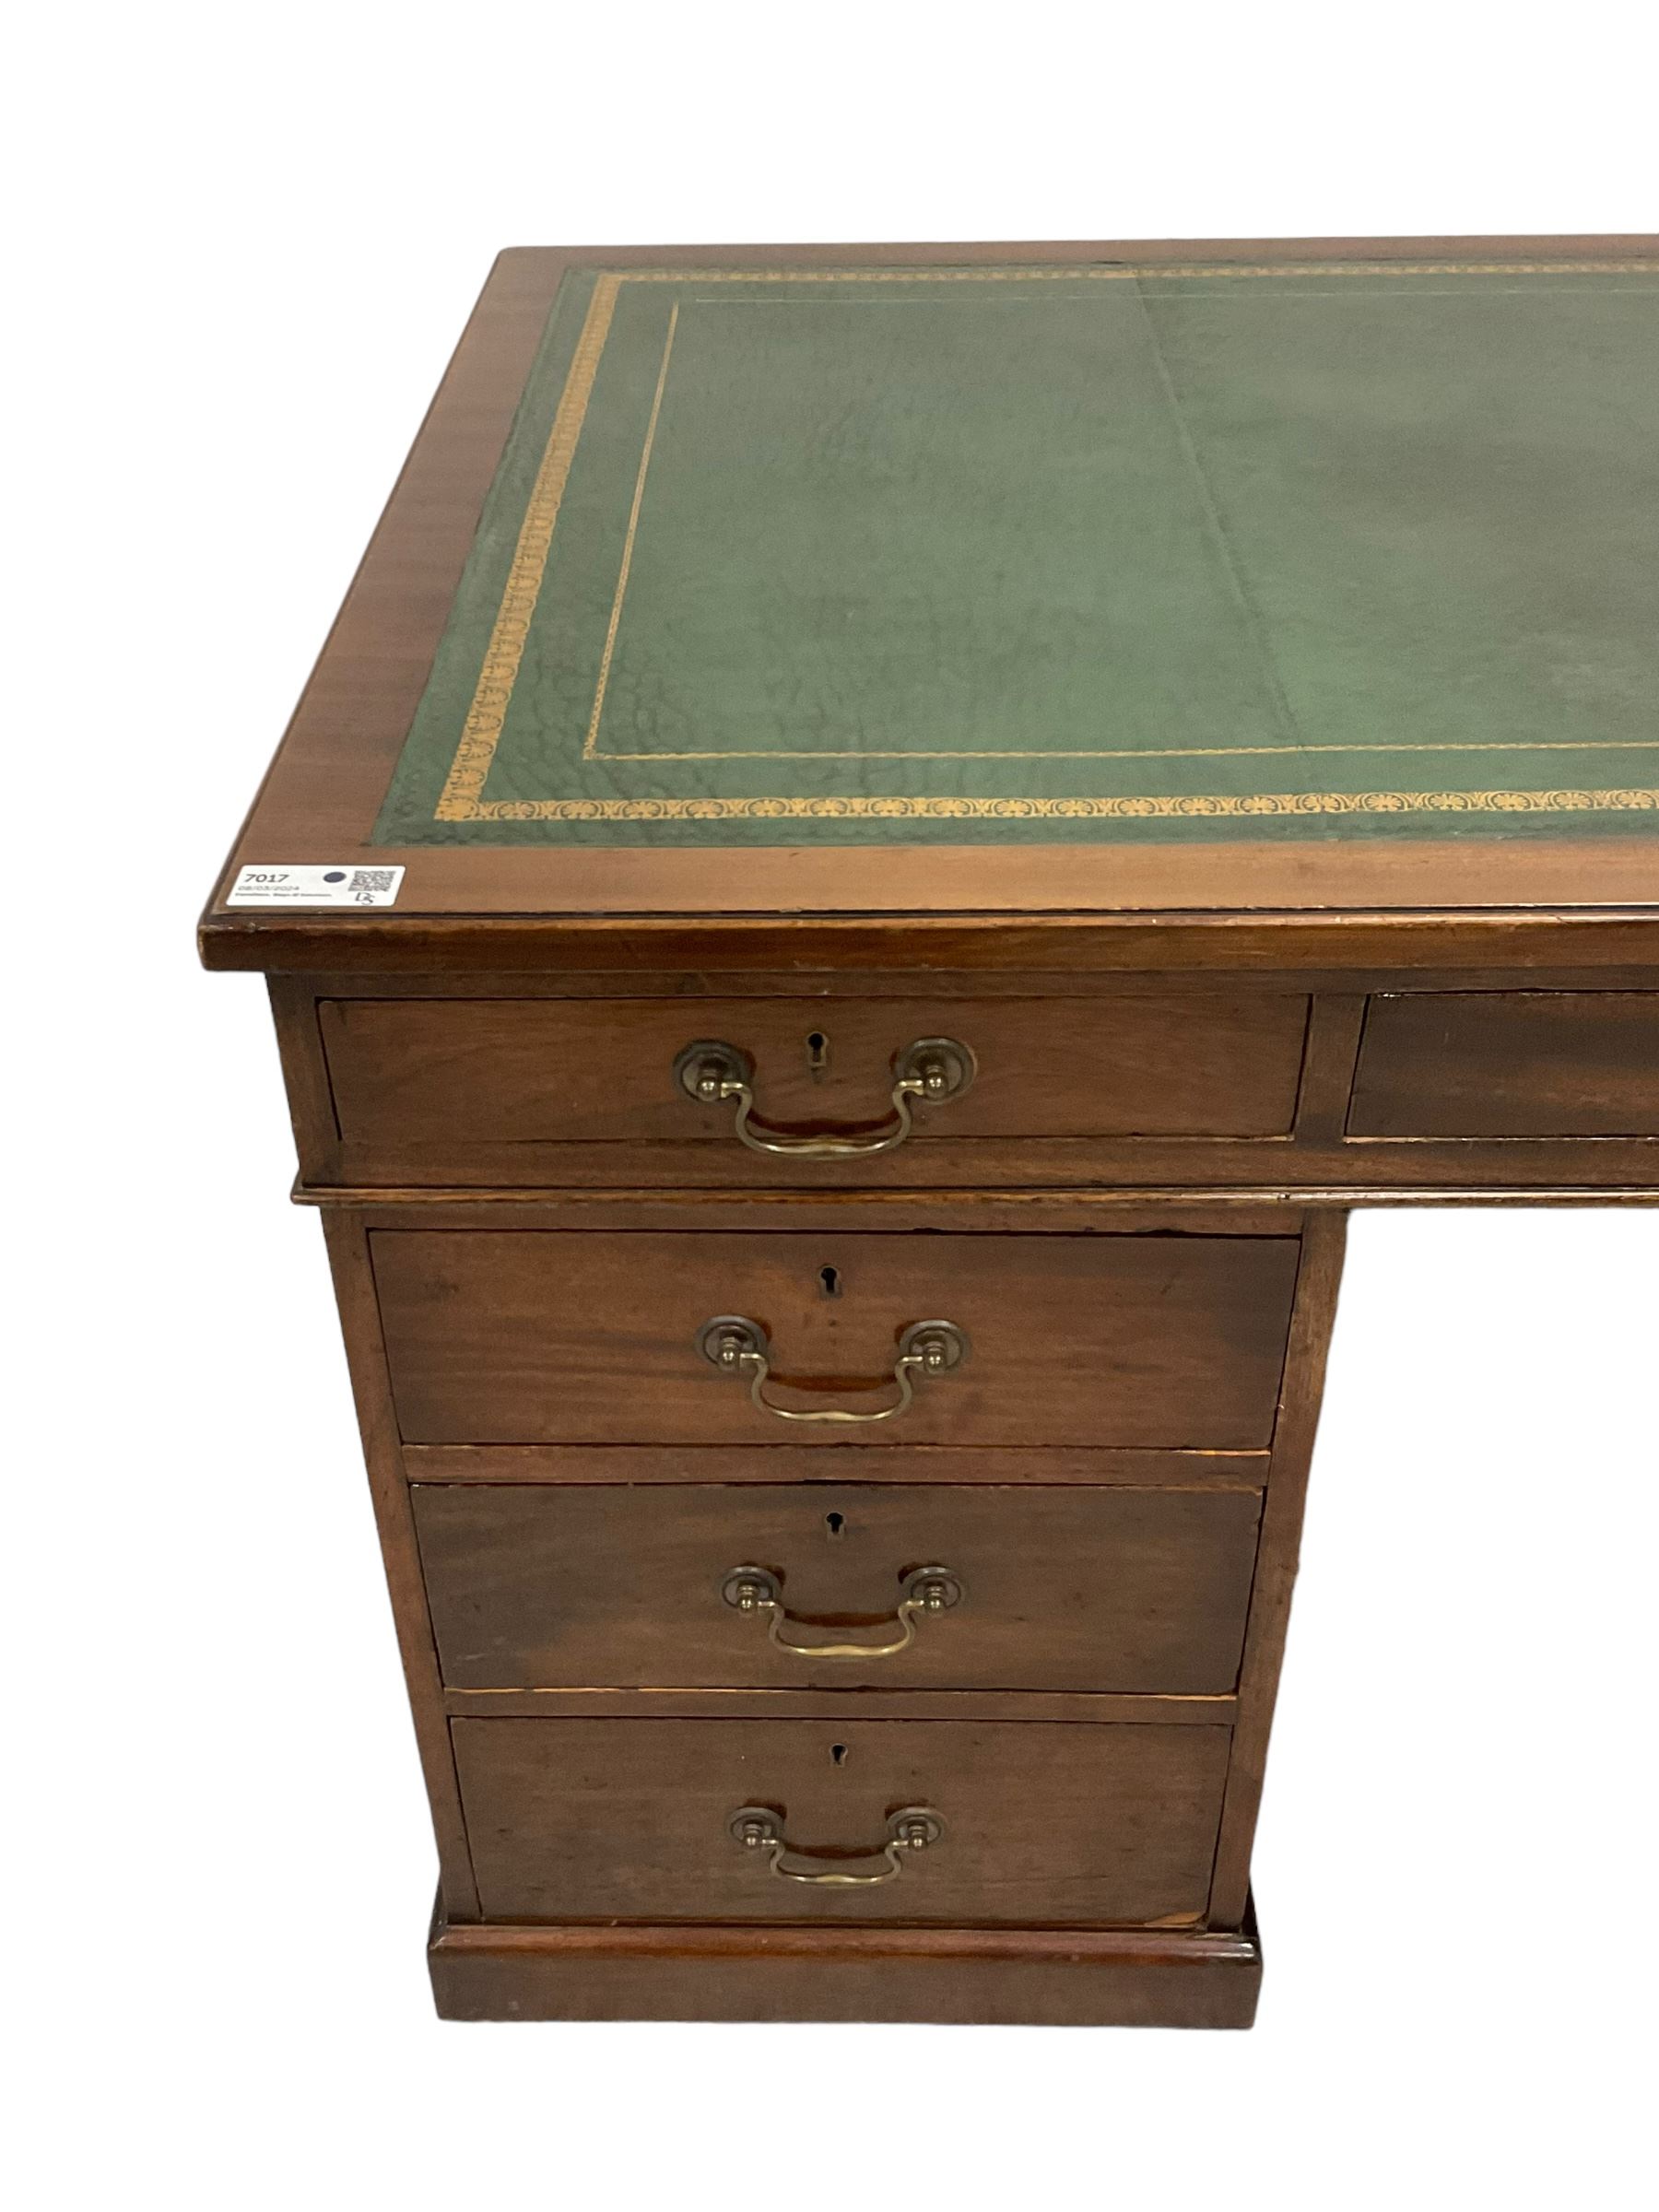 19th century mahogany twin pedestal desk - Image 5 of 7